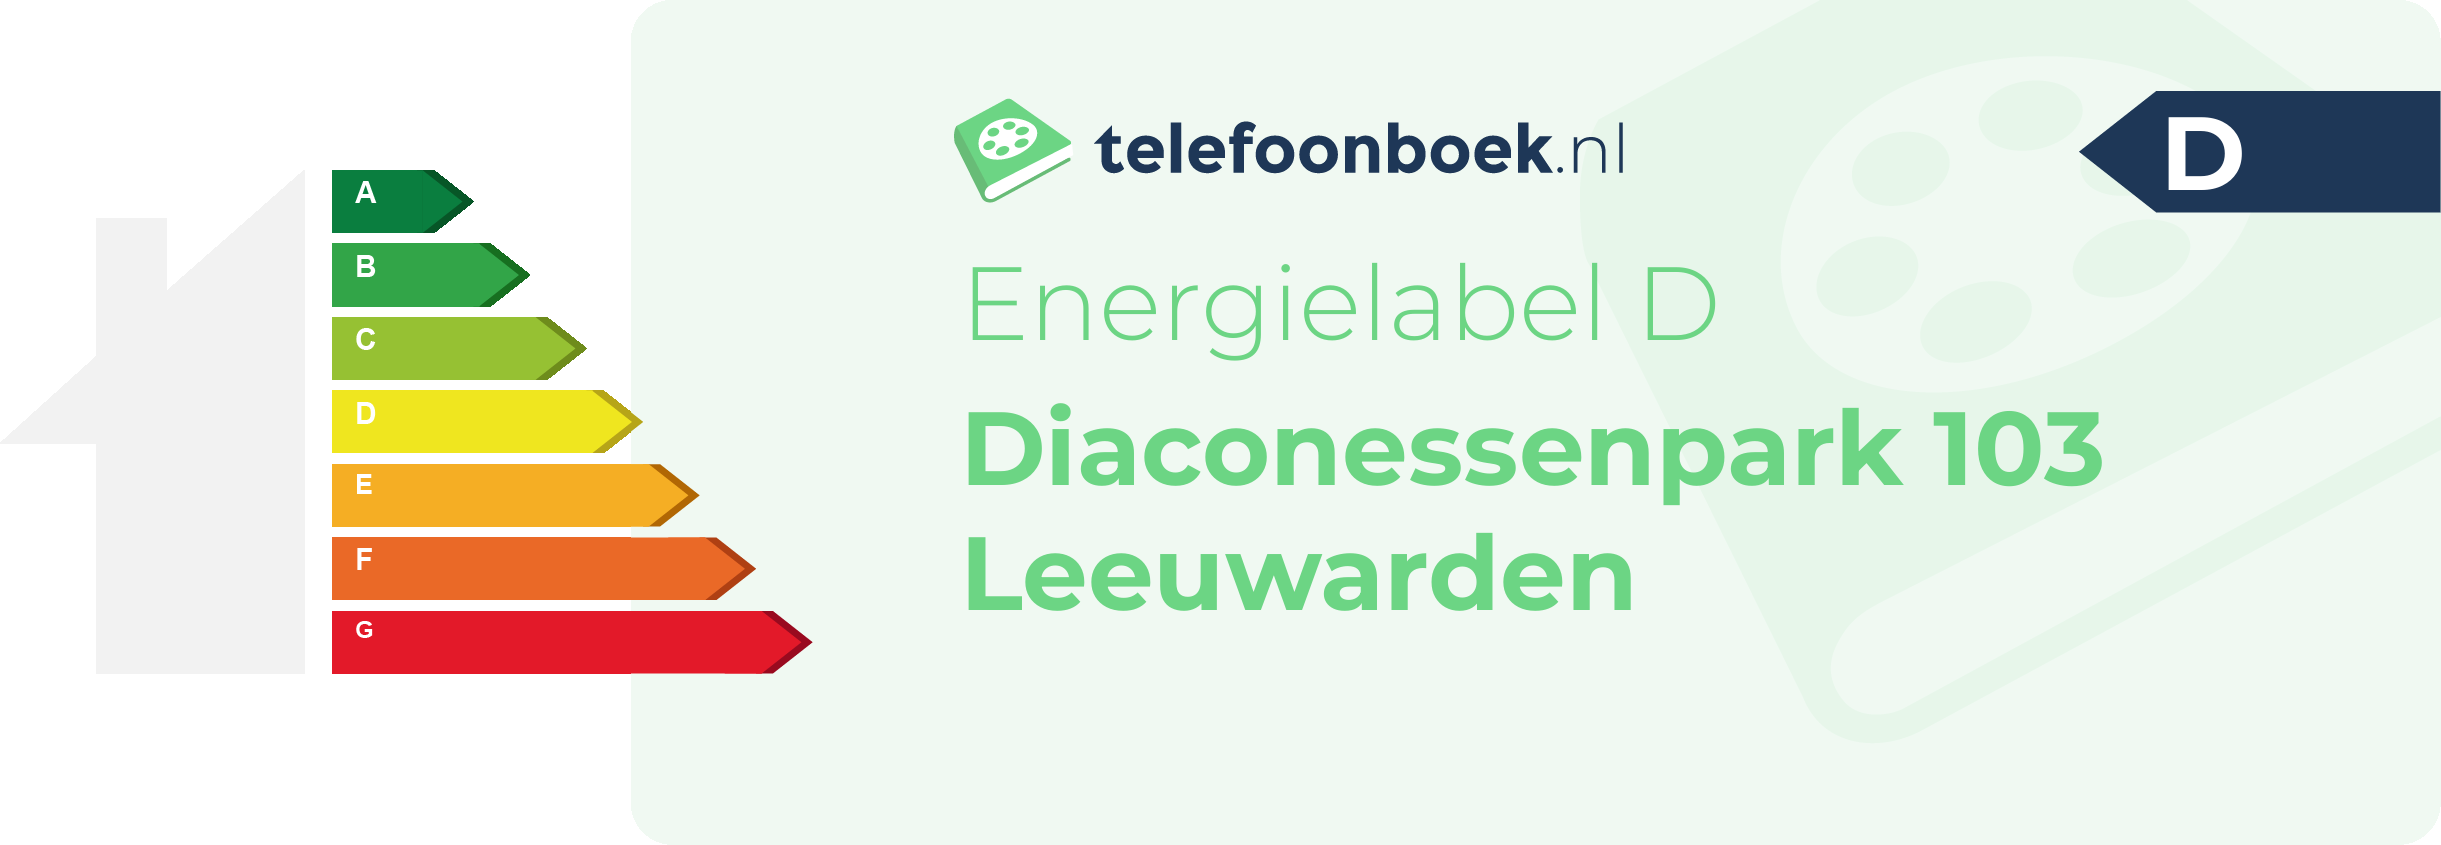 Energielabel Diaconessenpark 103 Leeuwarden